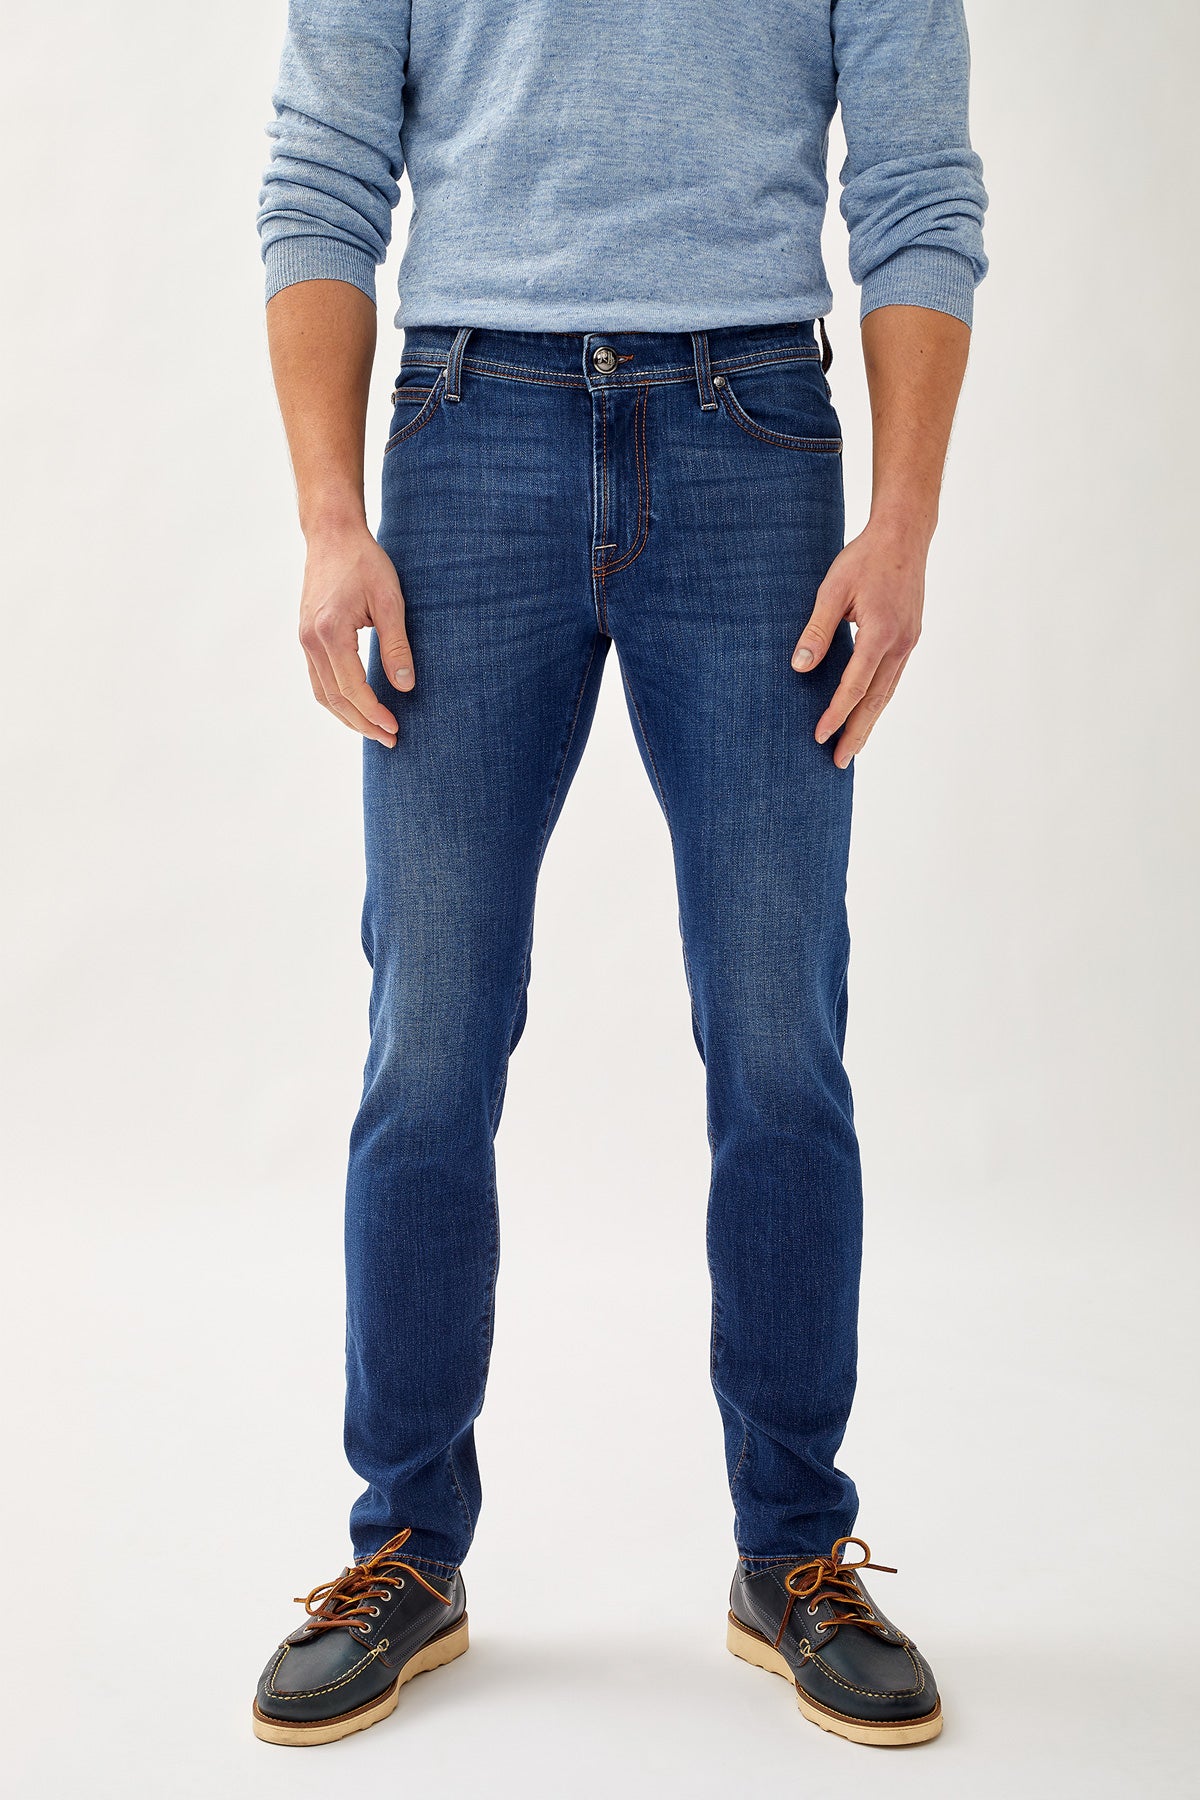 Jeans Stretch 517 RR'S Sagrantino / Jeans - Ideal Moda